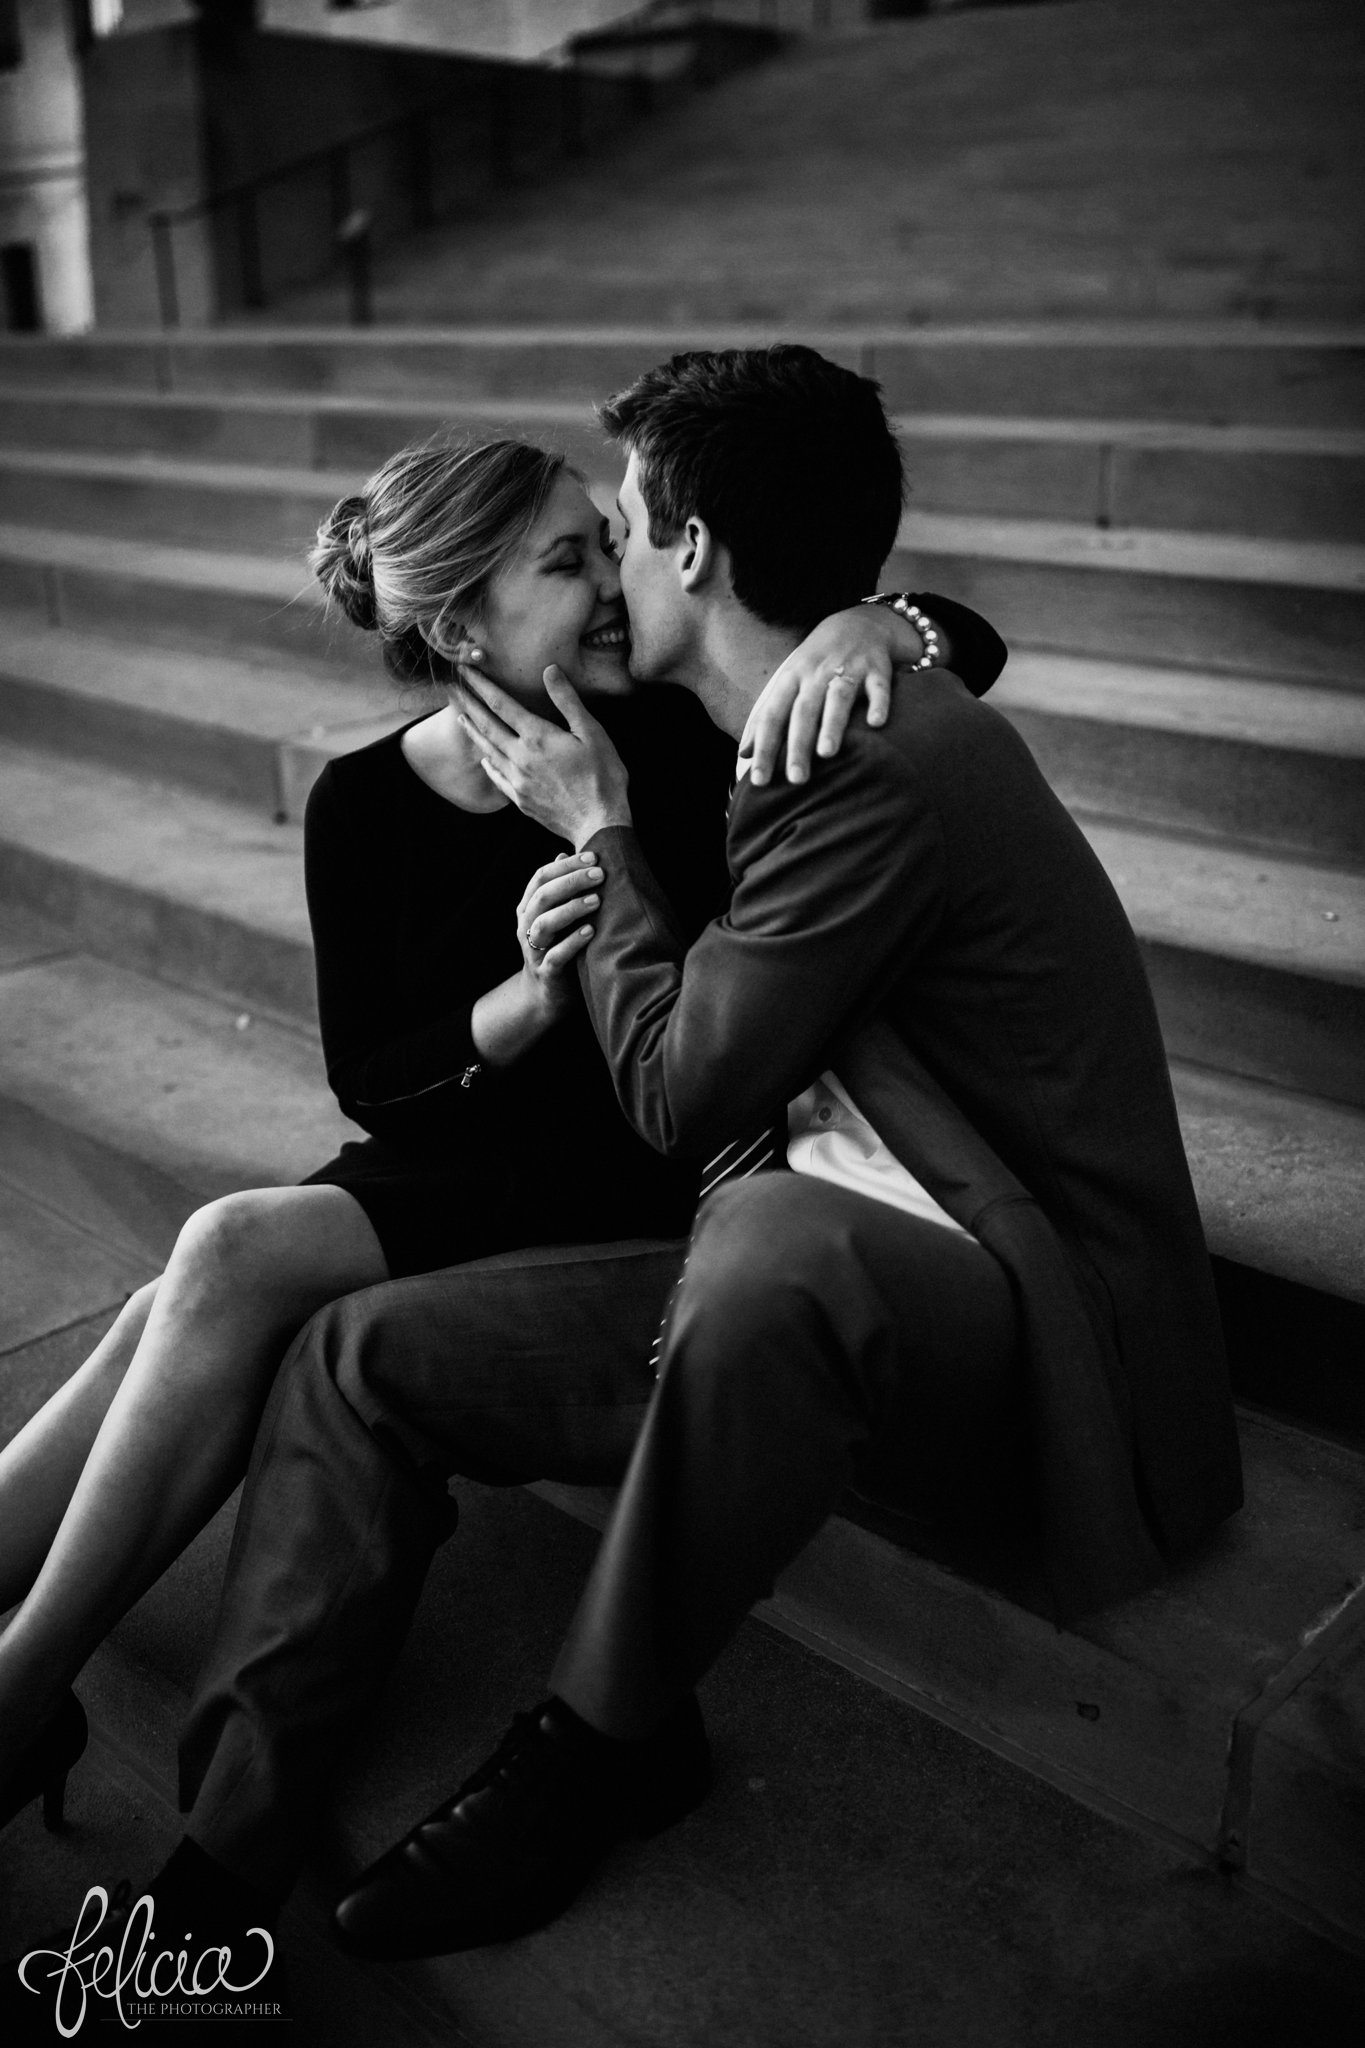 images by feliciathephotographer.com | wedding photographer | kansas city missouri | engagement | kiss | true love | romantic | black and white | classy | elegant | laughter | joy | 